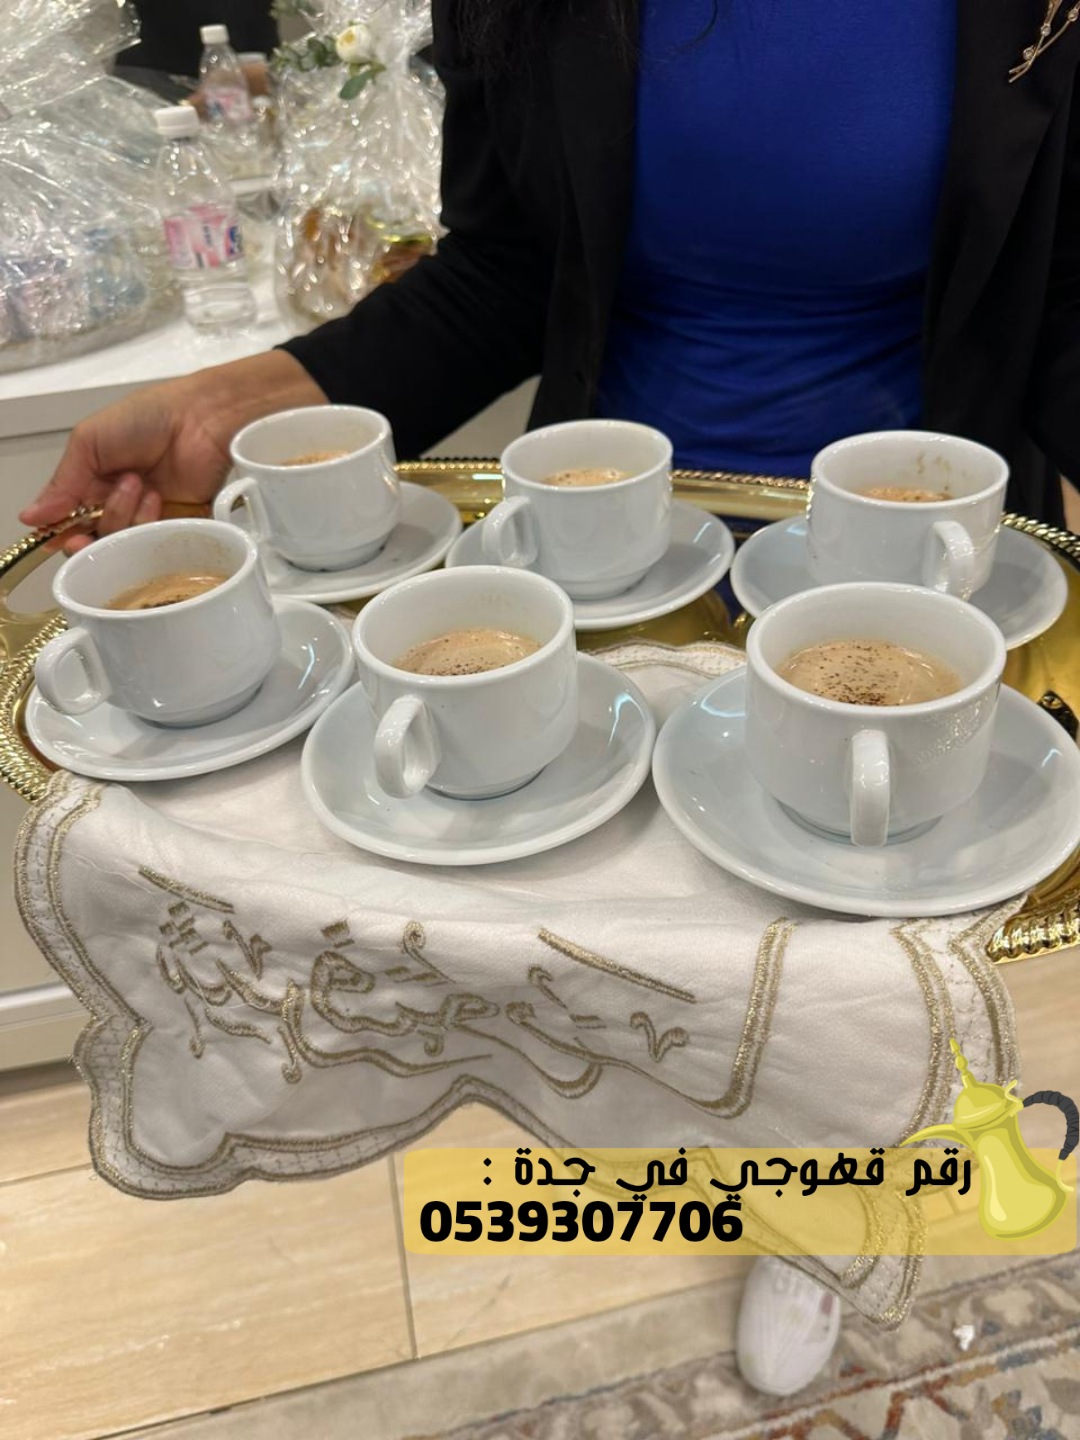 صبابين قهوه مباشرات قهوه في جدة,0539307706